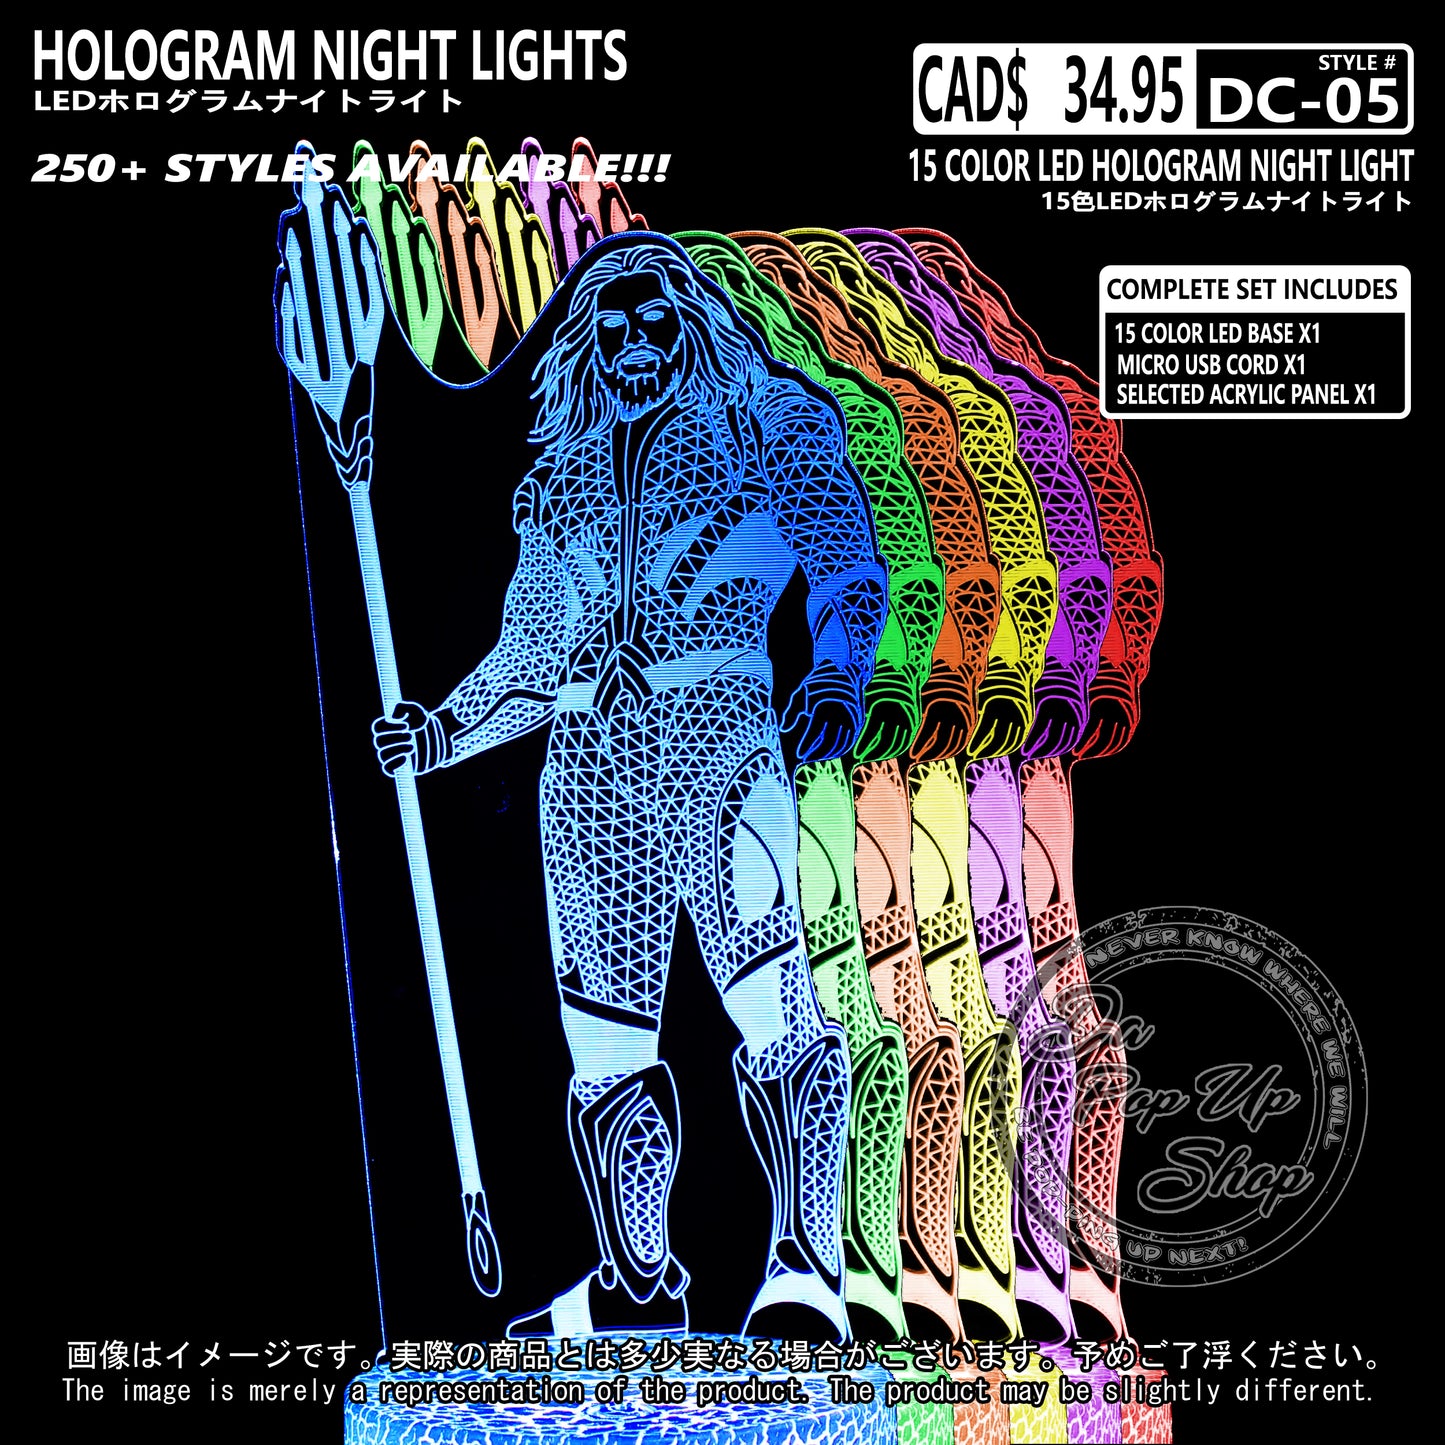 (DC-05) DC Hologram LED Night Light